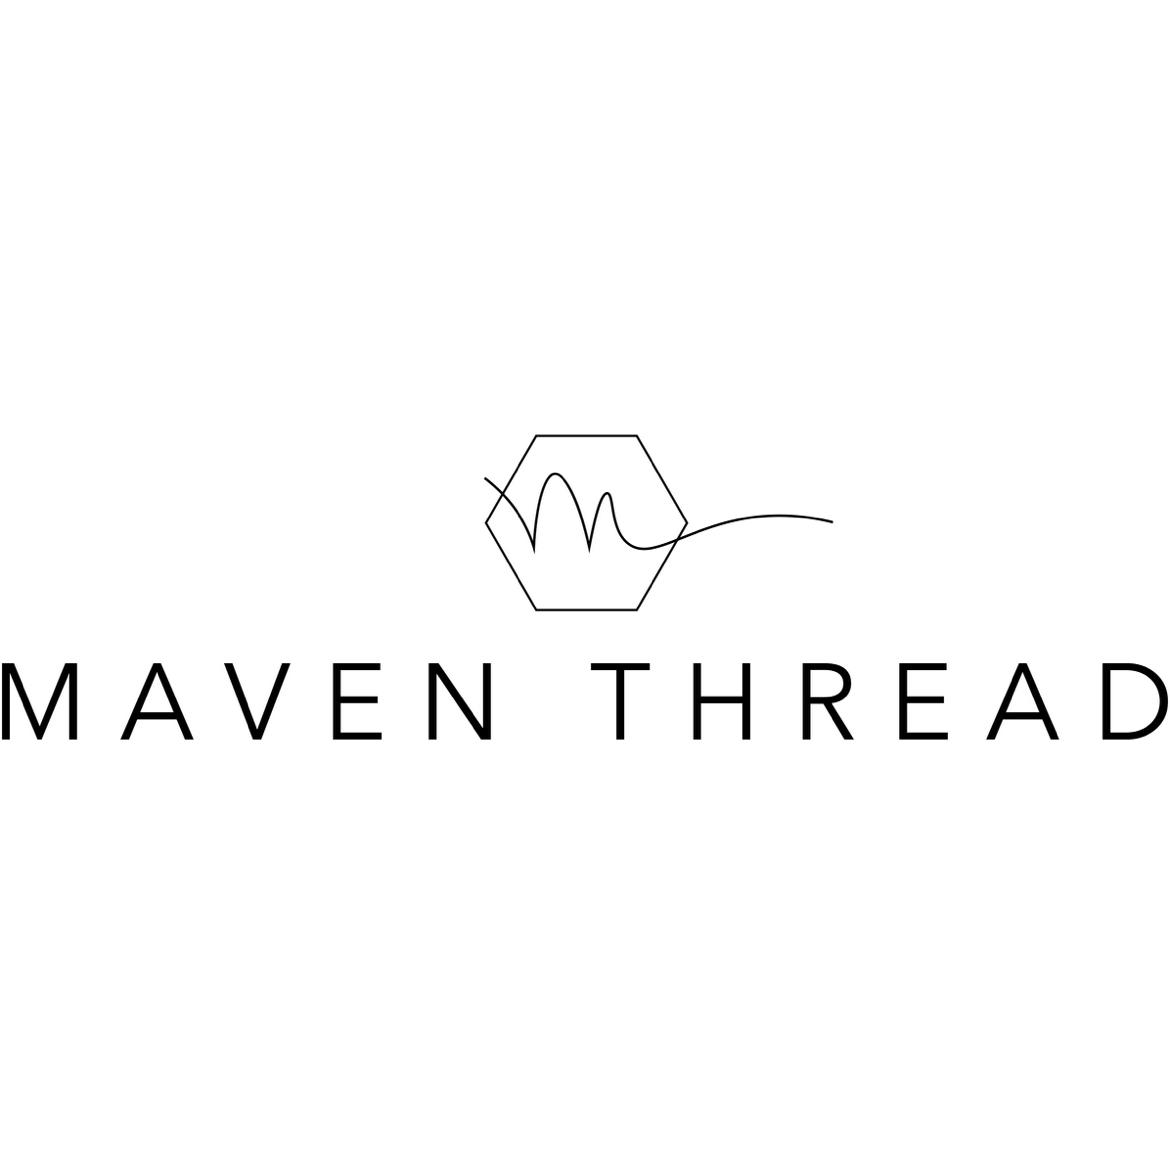 Maven Thread Review